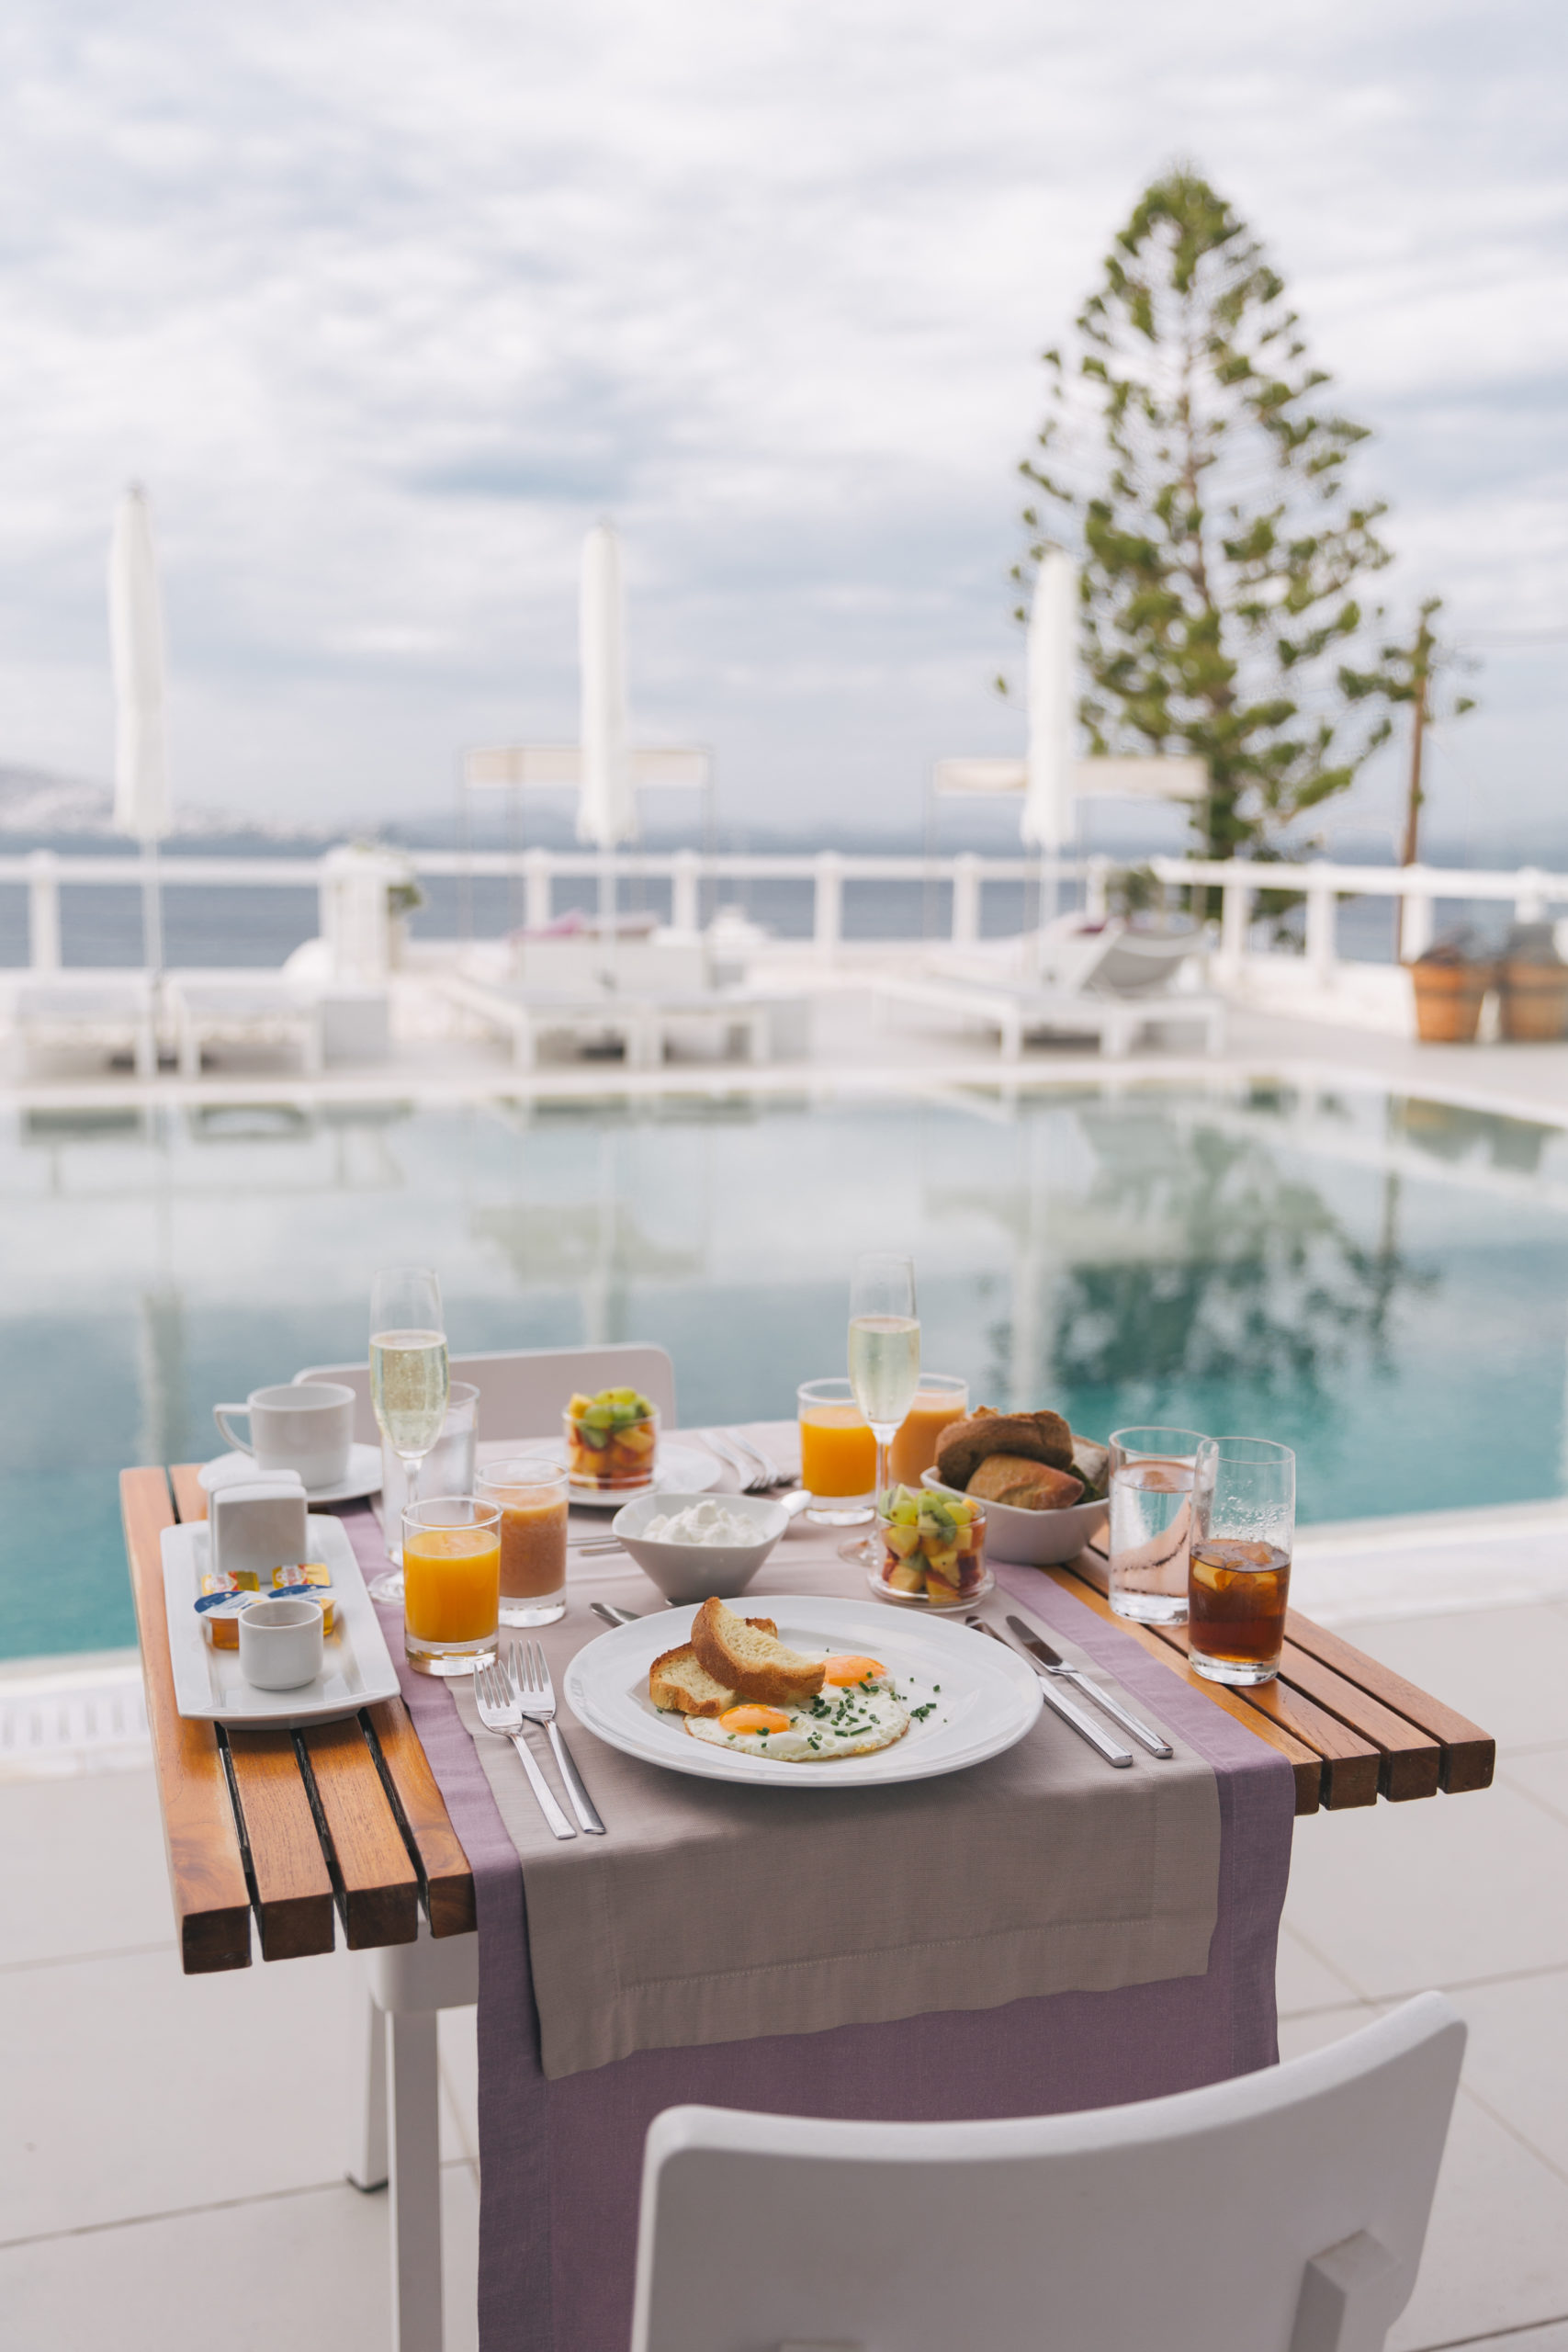 breakfast by the pool